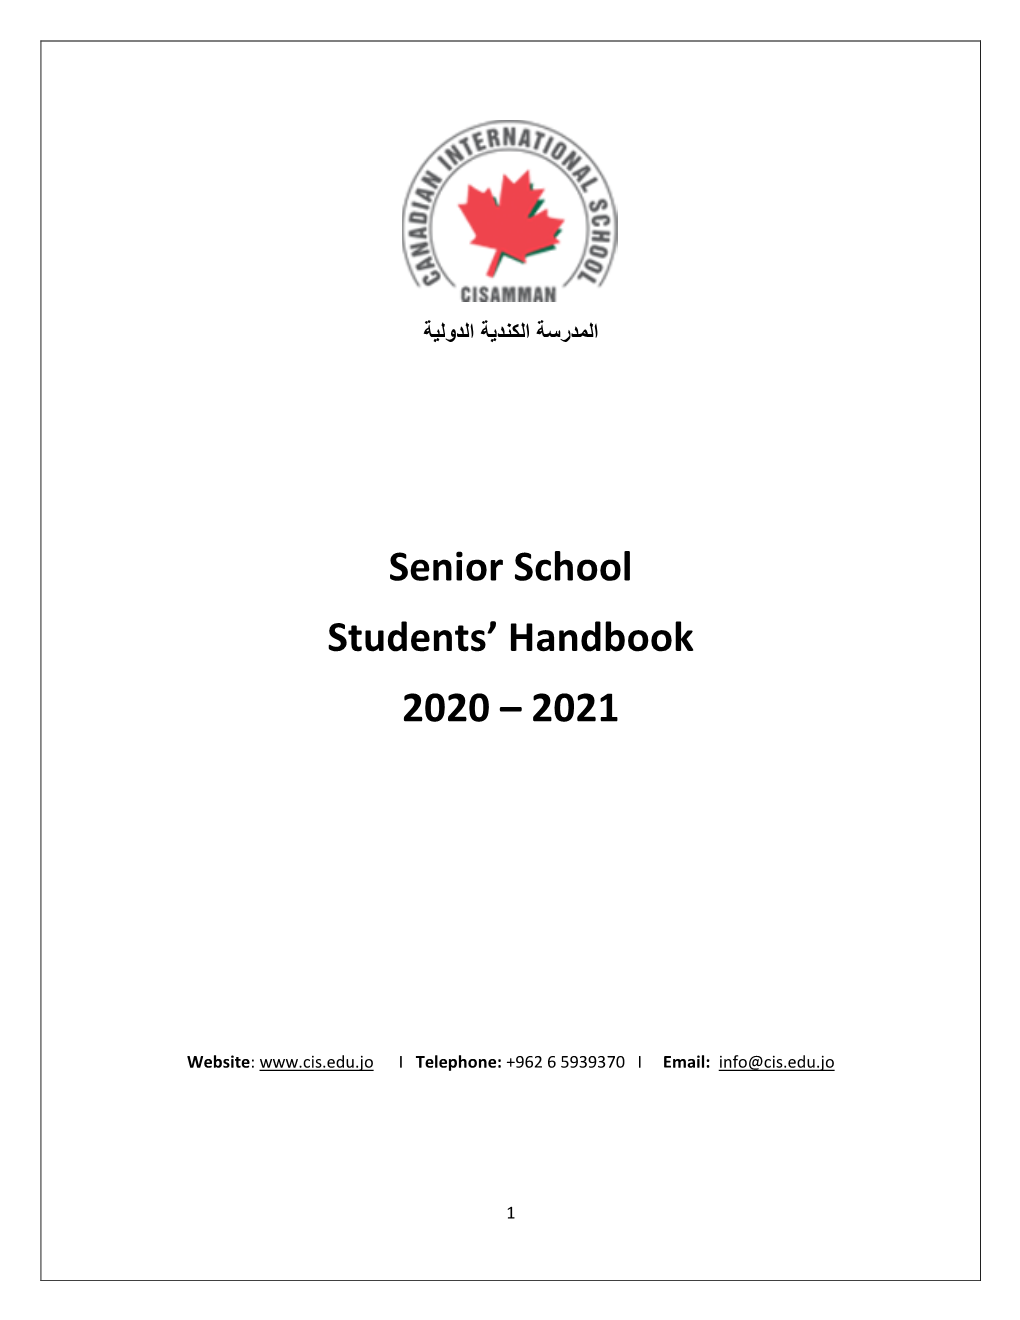 Senior School Students' Handbook 2020 – 2021